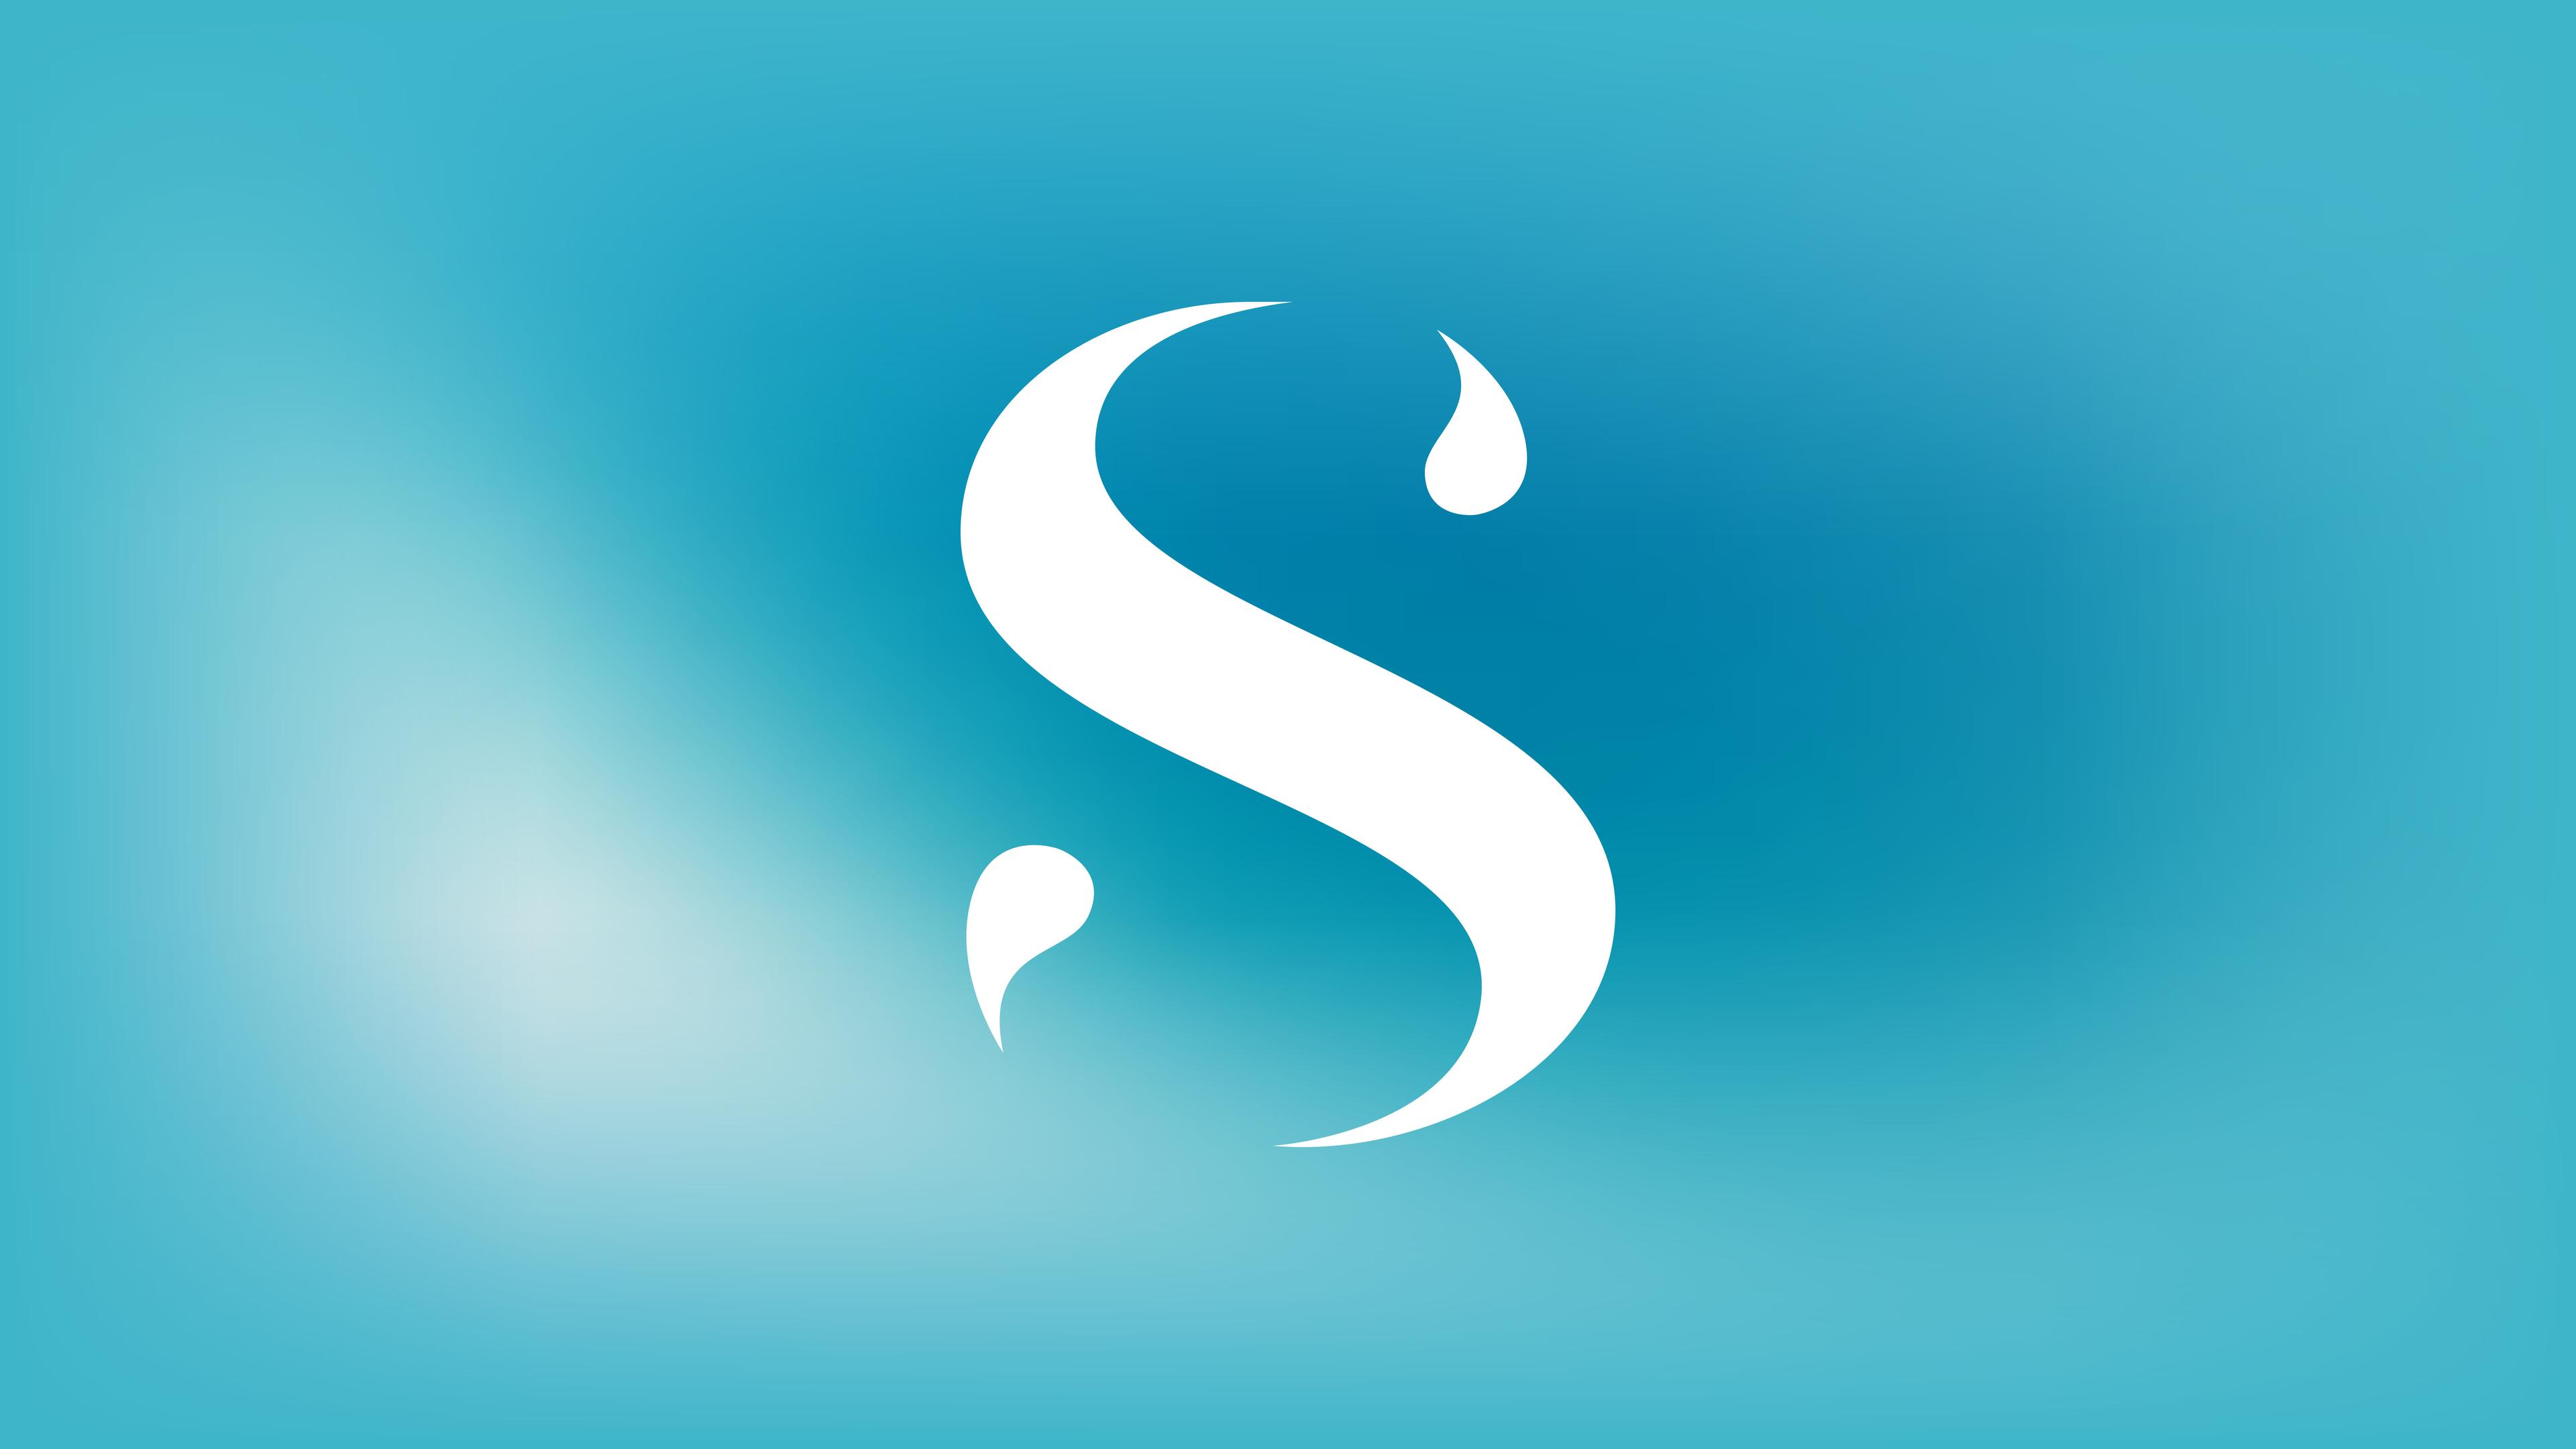 ShoreLine's logo on a blue gradient background